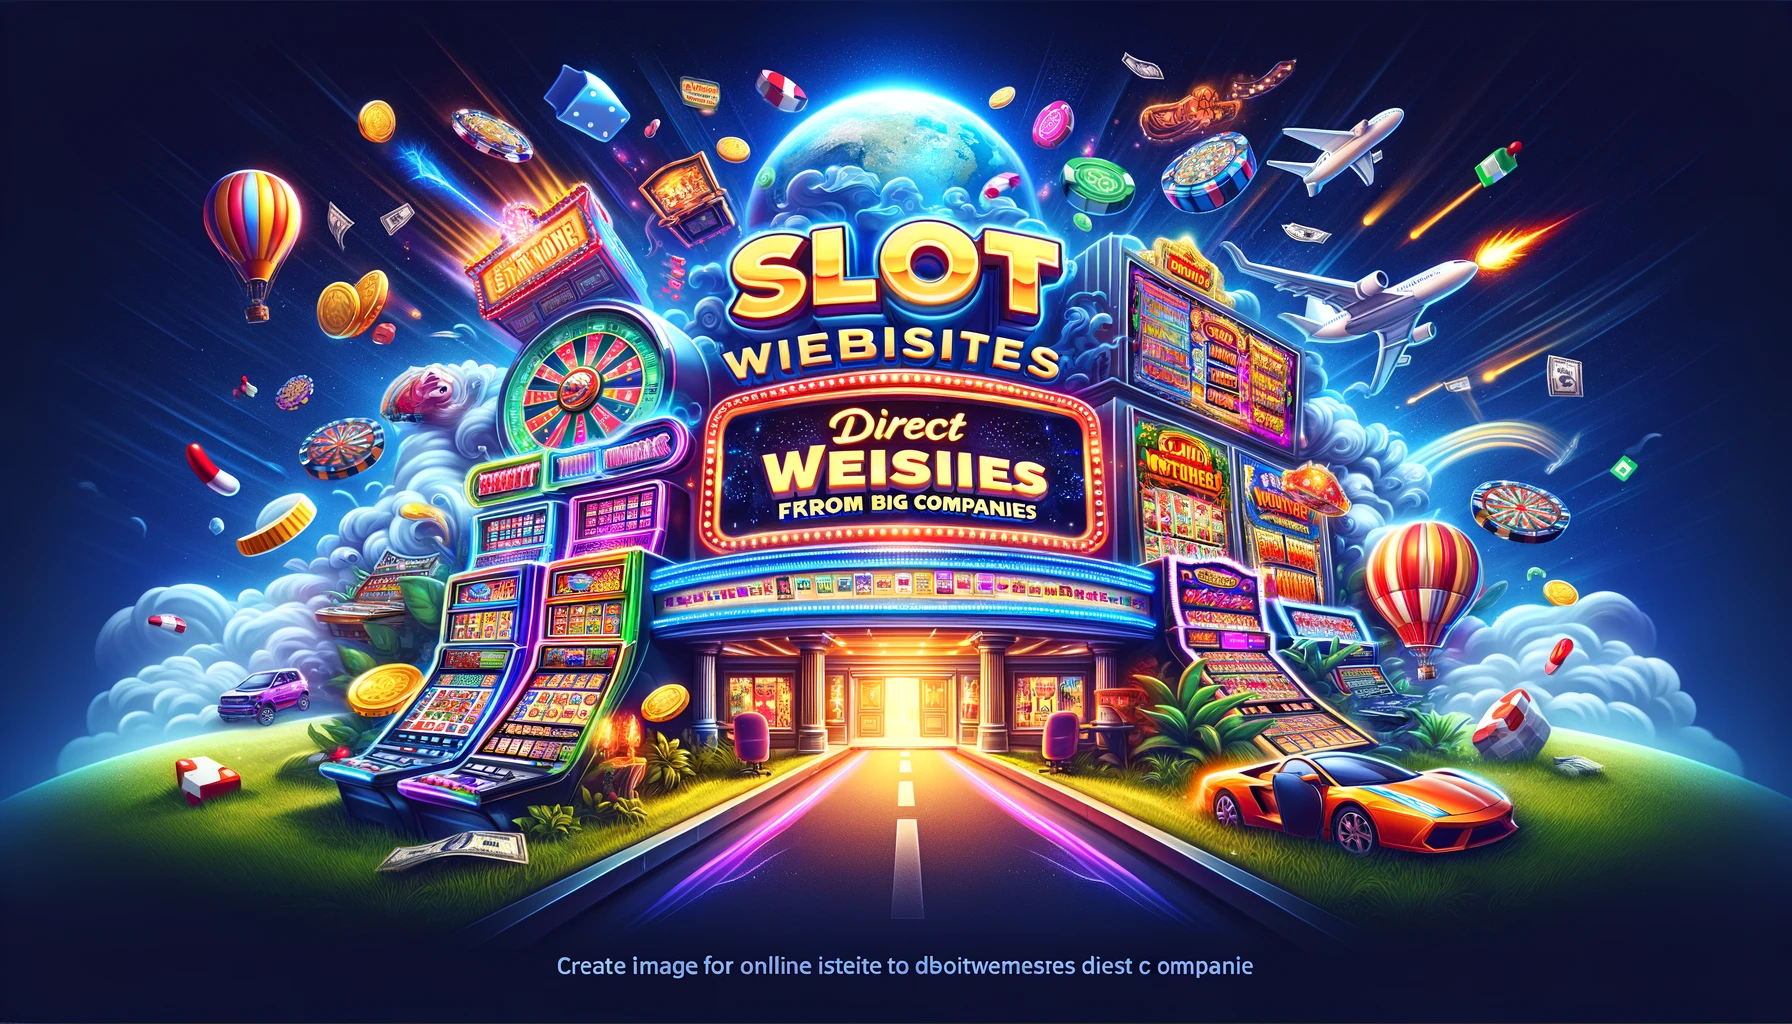 Slot websites, direct websites from big companies